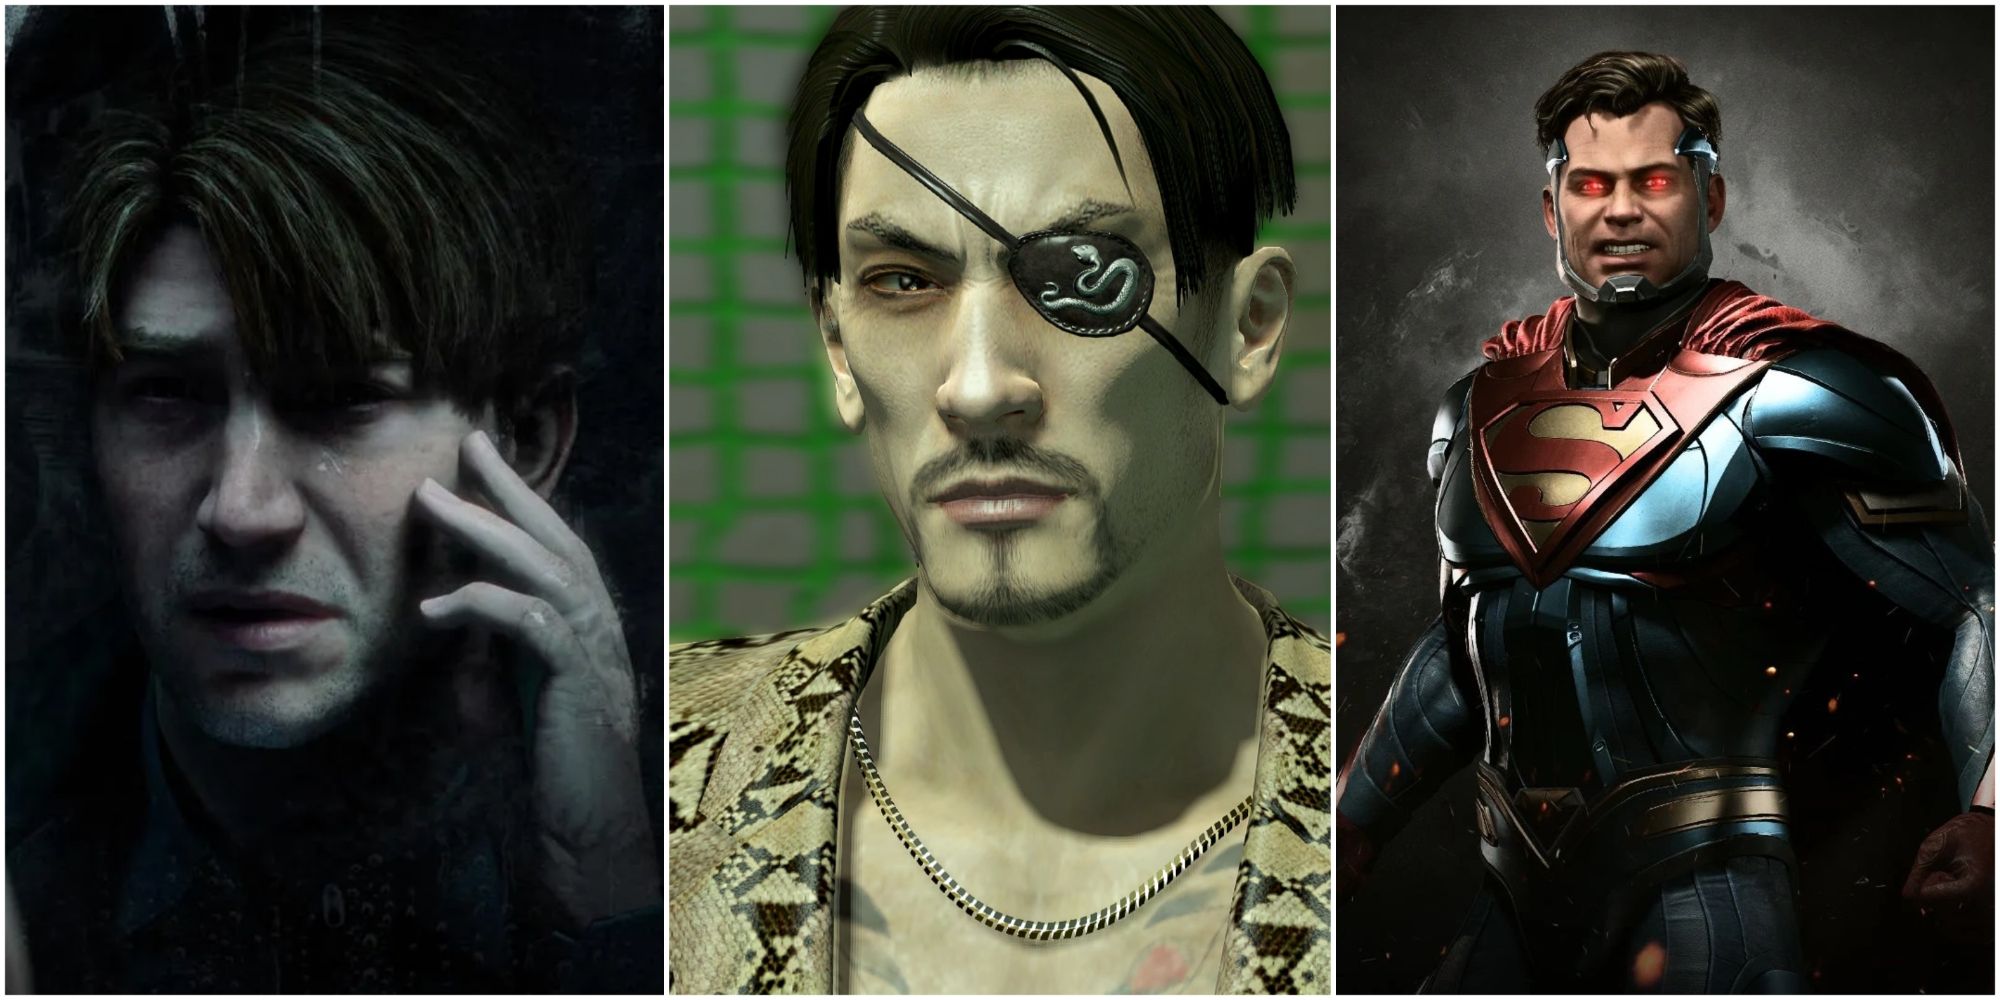 Tragic Villians in Games Featured Image - James Sunderland, Goro Majima and Superman